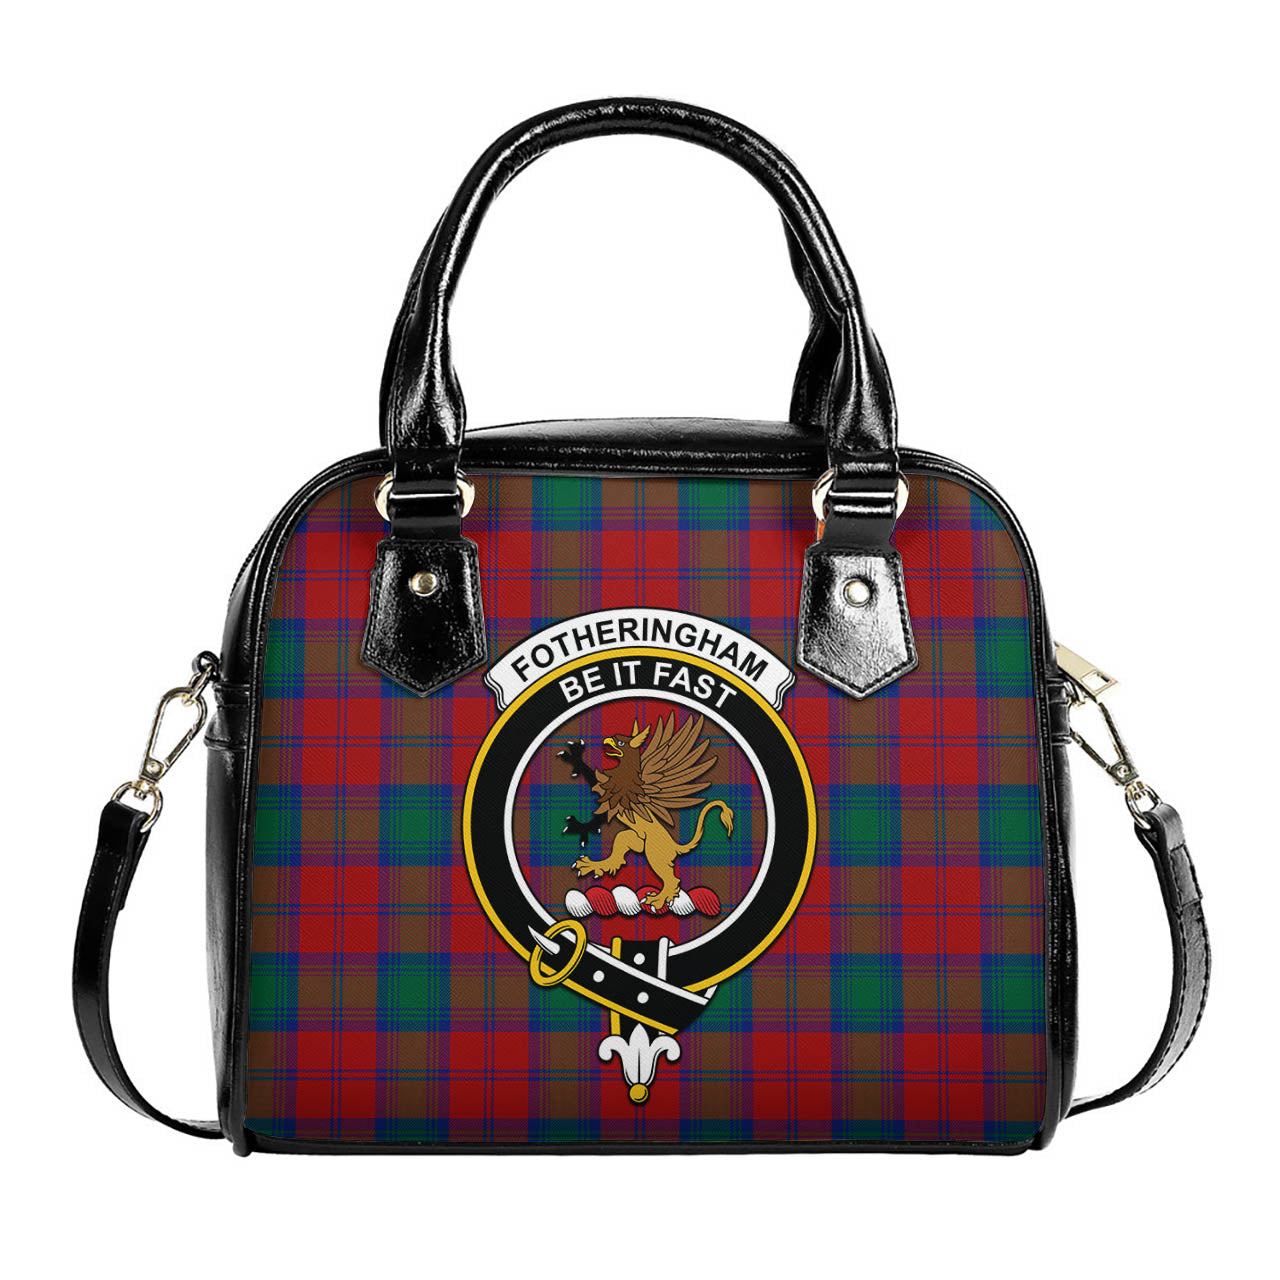 Fotheringham Modern Tartan Shoulder Handbags with Family Crest One Size 6*25*22 cm - Tartanvibesclothing